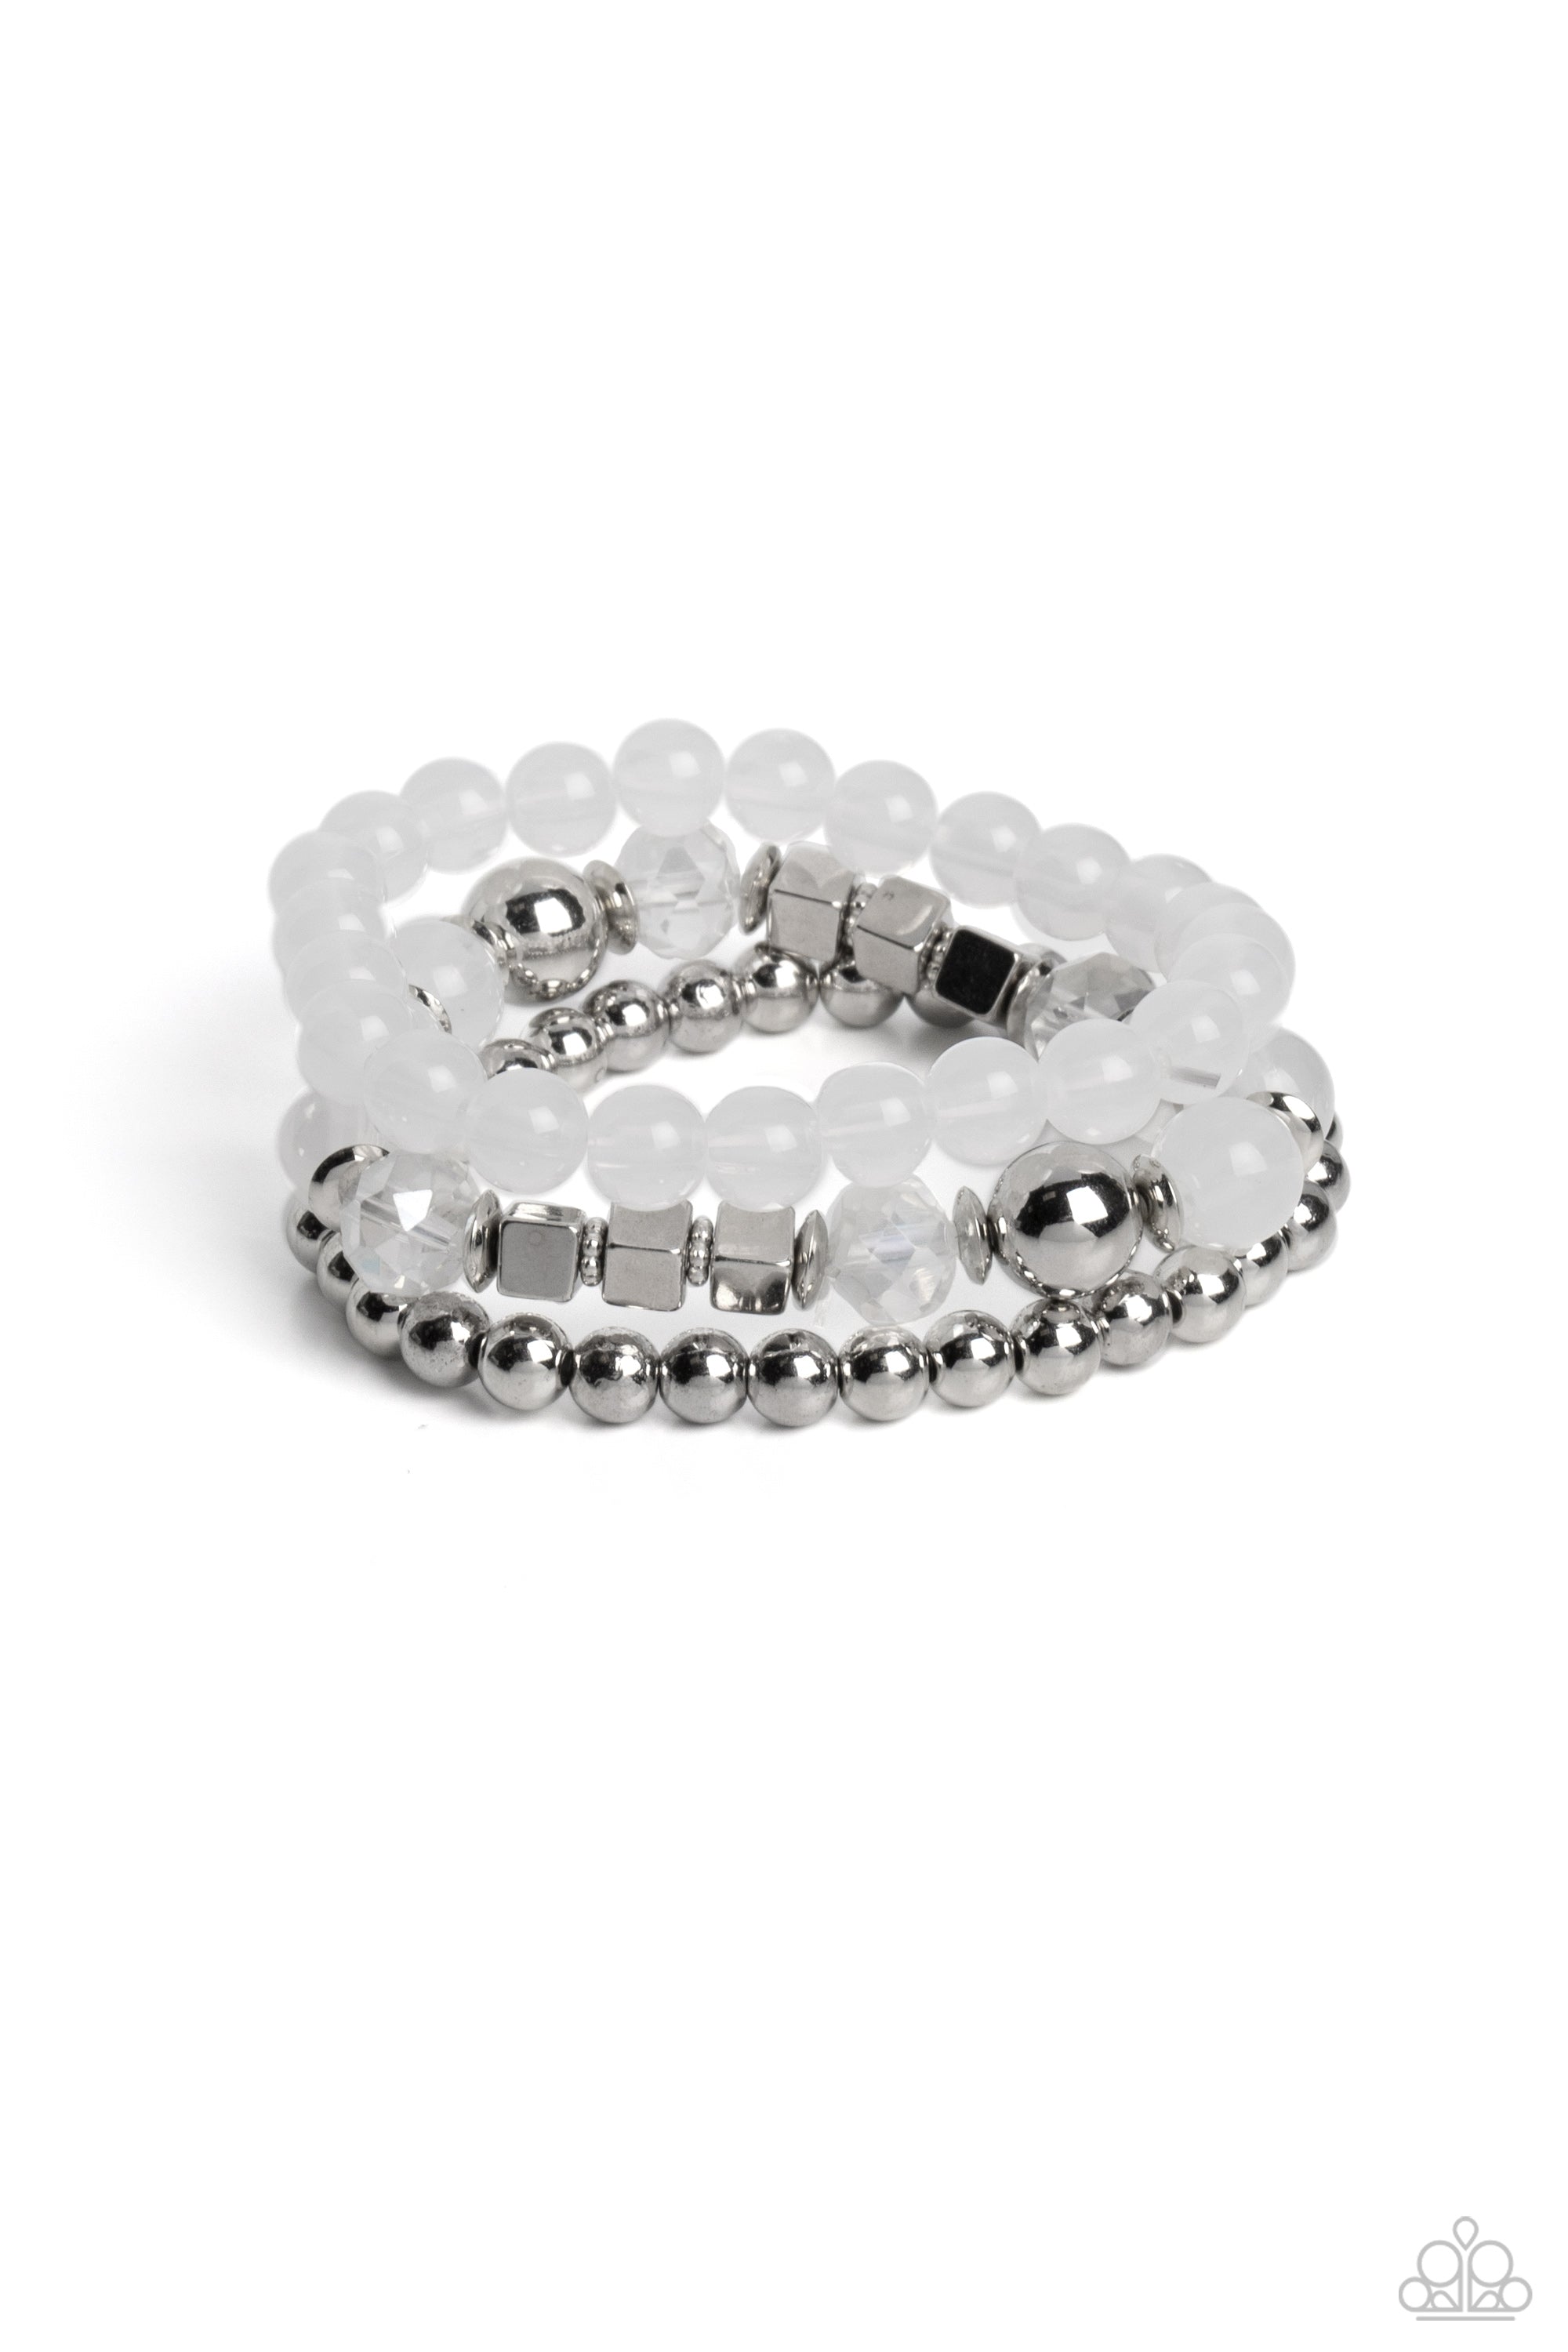 Ethereal Etiquette - White Pearl & Rhinestone Bracelet - Chic Jewelry